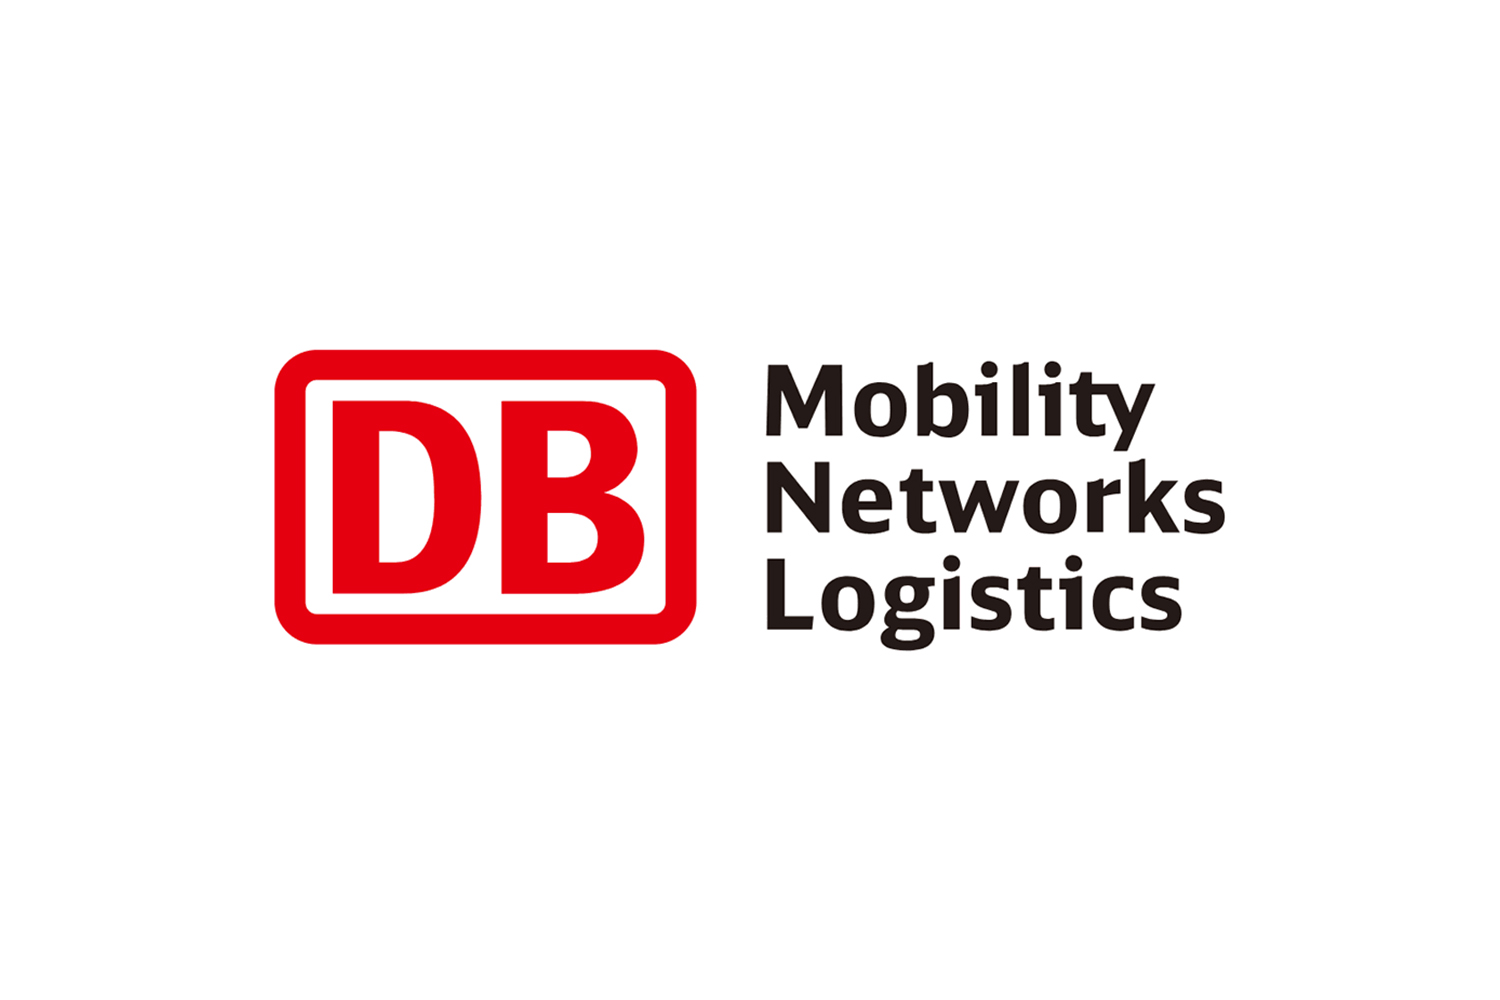 DB mobility network logistic Logo